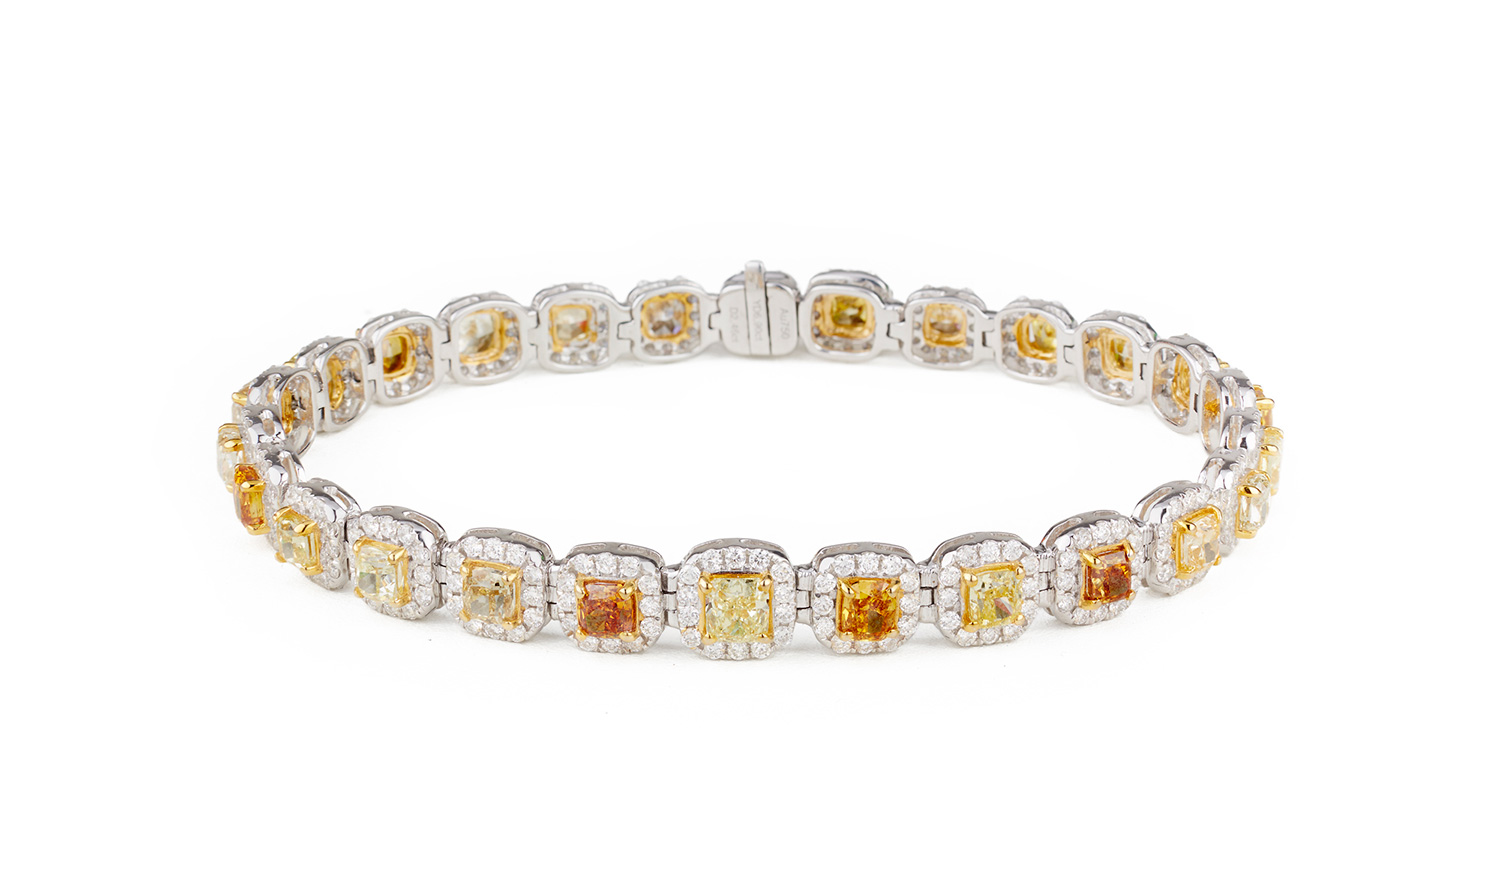 E Commerce Product Jewelry Diamond Bracelet Photography on White Background Dallas Texas